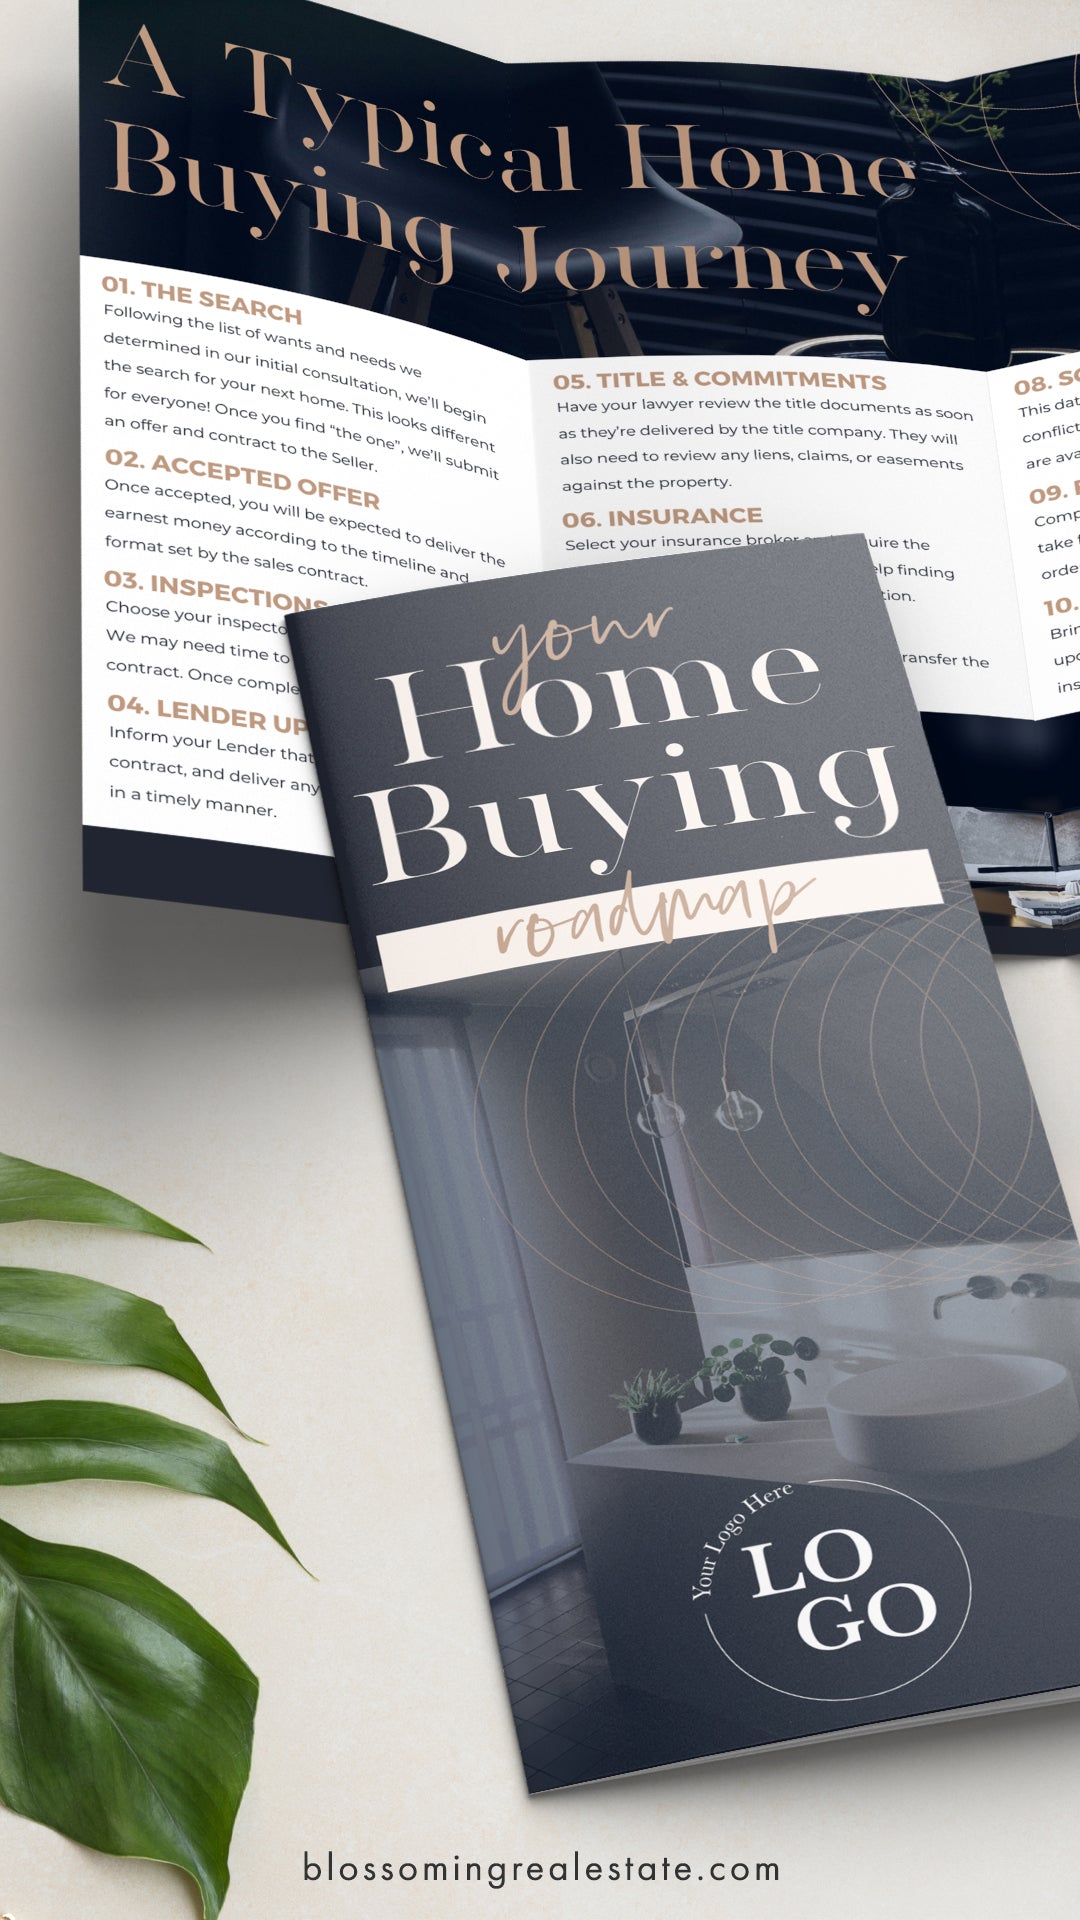 Home Buying Brochure